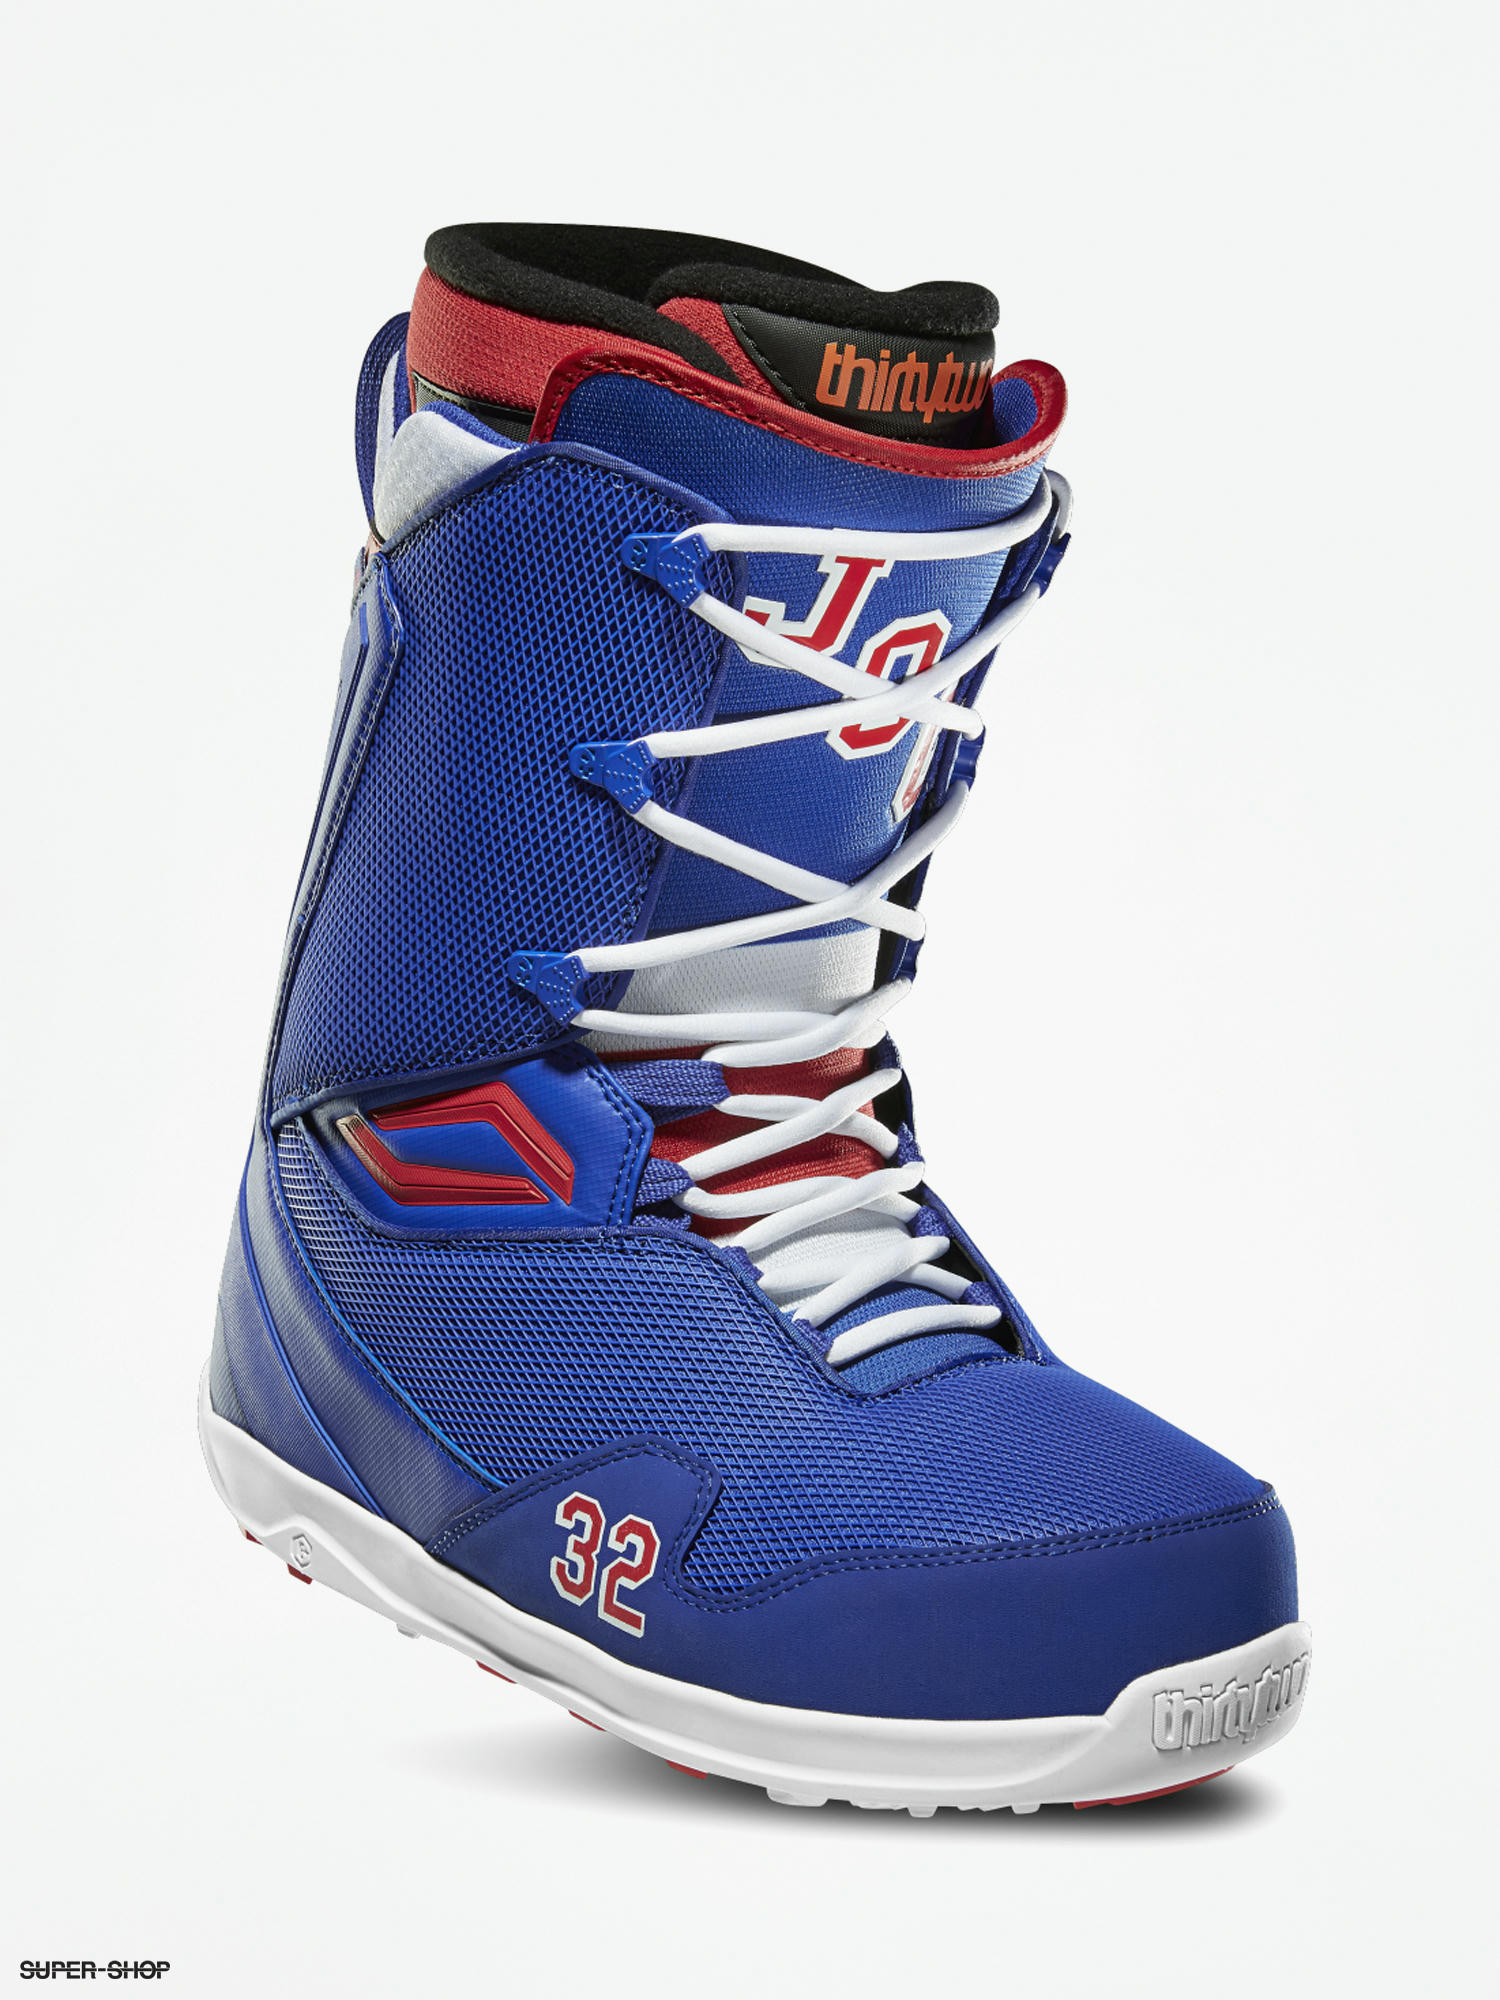 ThirtyTwo Tm 2 Joc Snowboard boots 